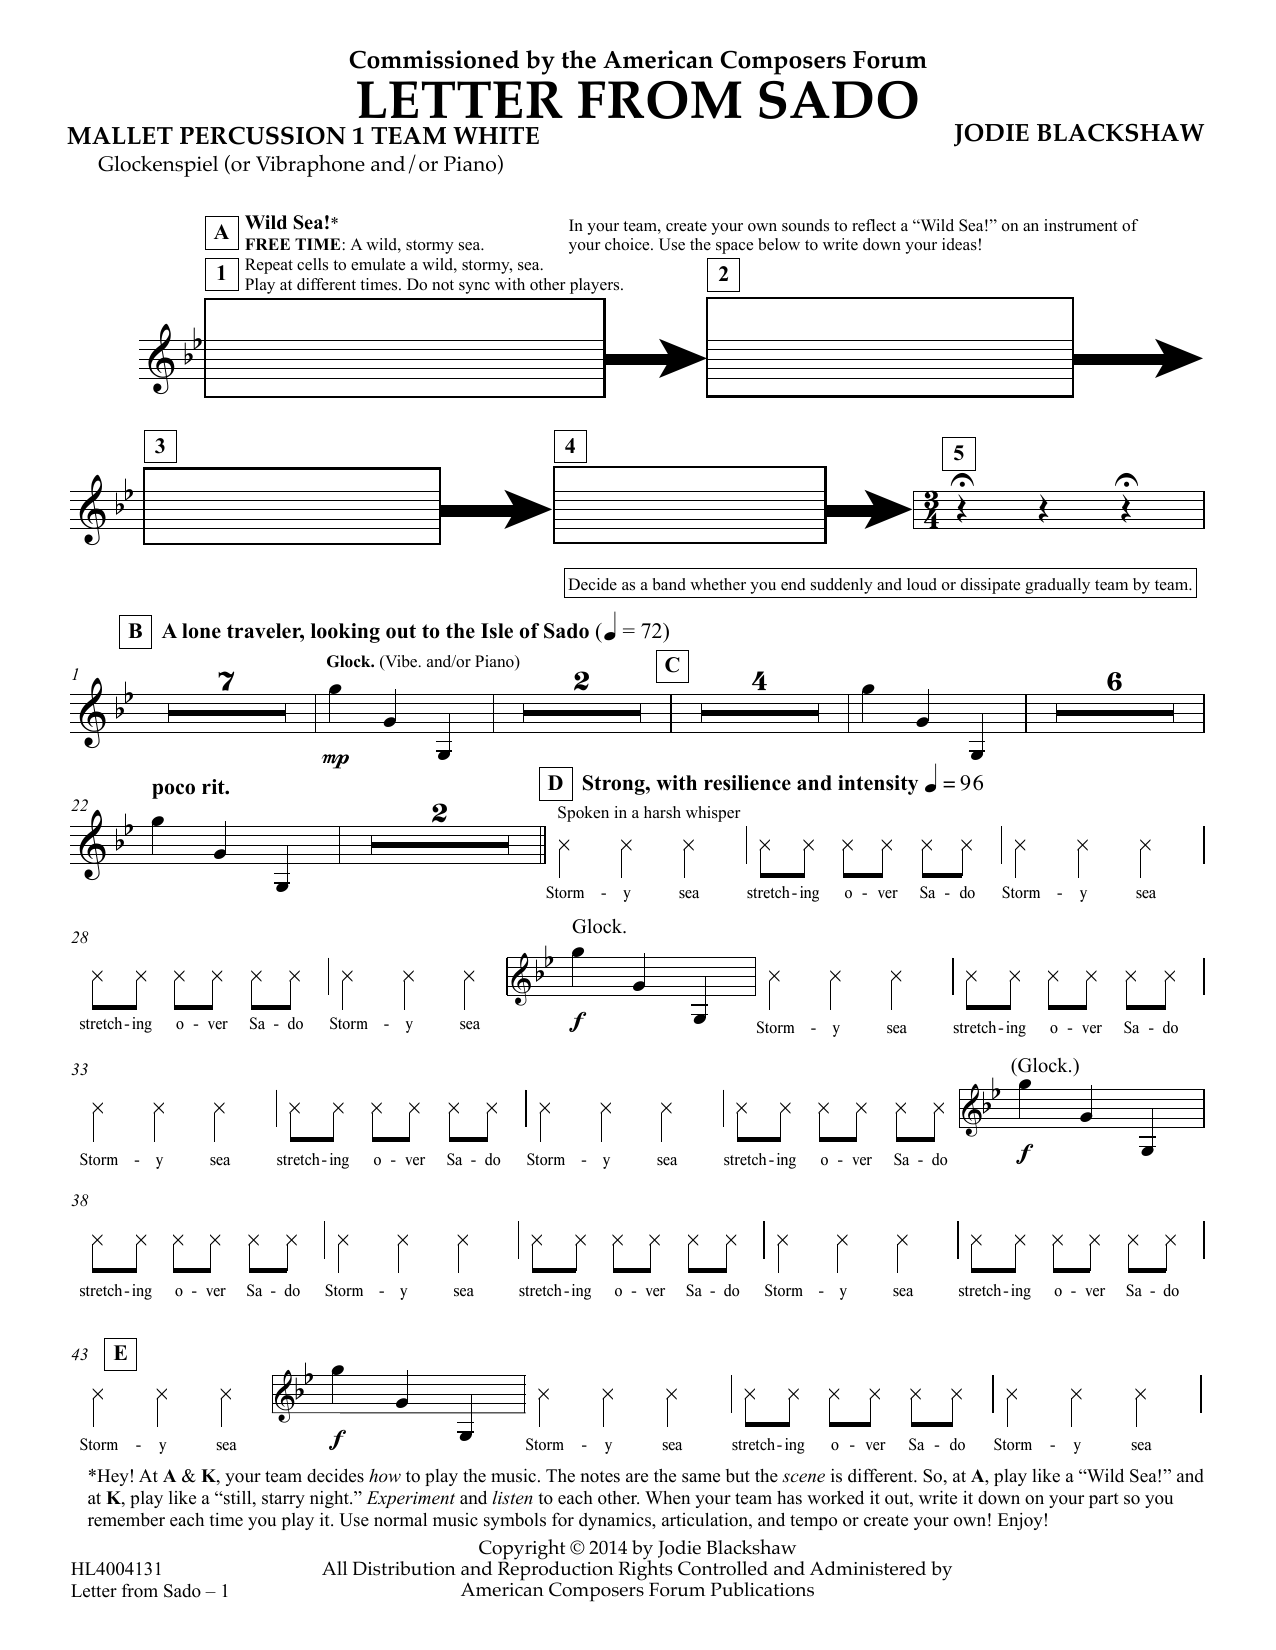 Jodie Blackshaw Letter from Sado - Mallet Perc 1 Bells Team White Sheet Music Notes & Chords for Concert Band - Download or Print PDF